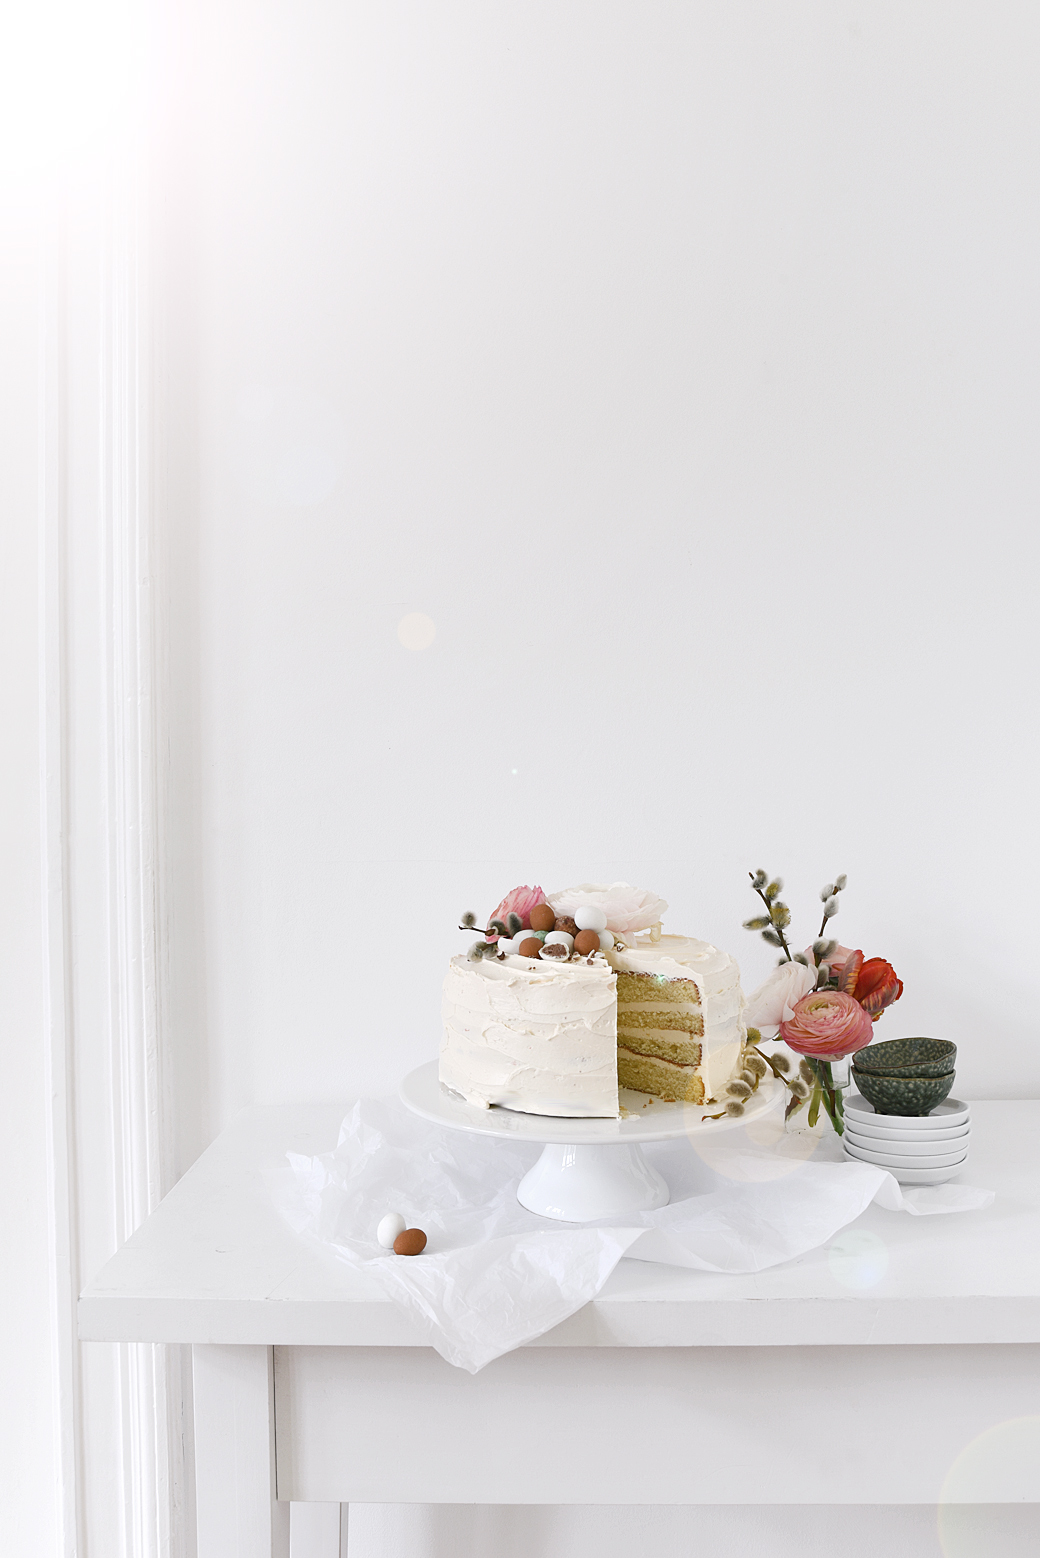 6 DIY复活节桌面的想法和华丽的蛋糕食谱